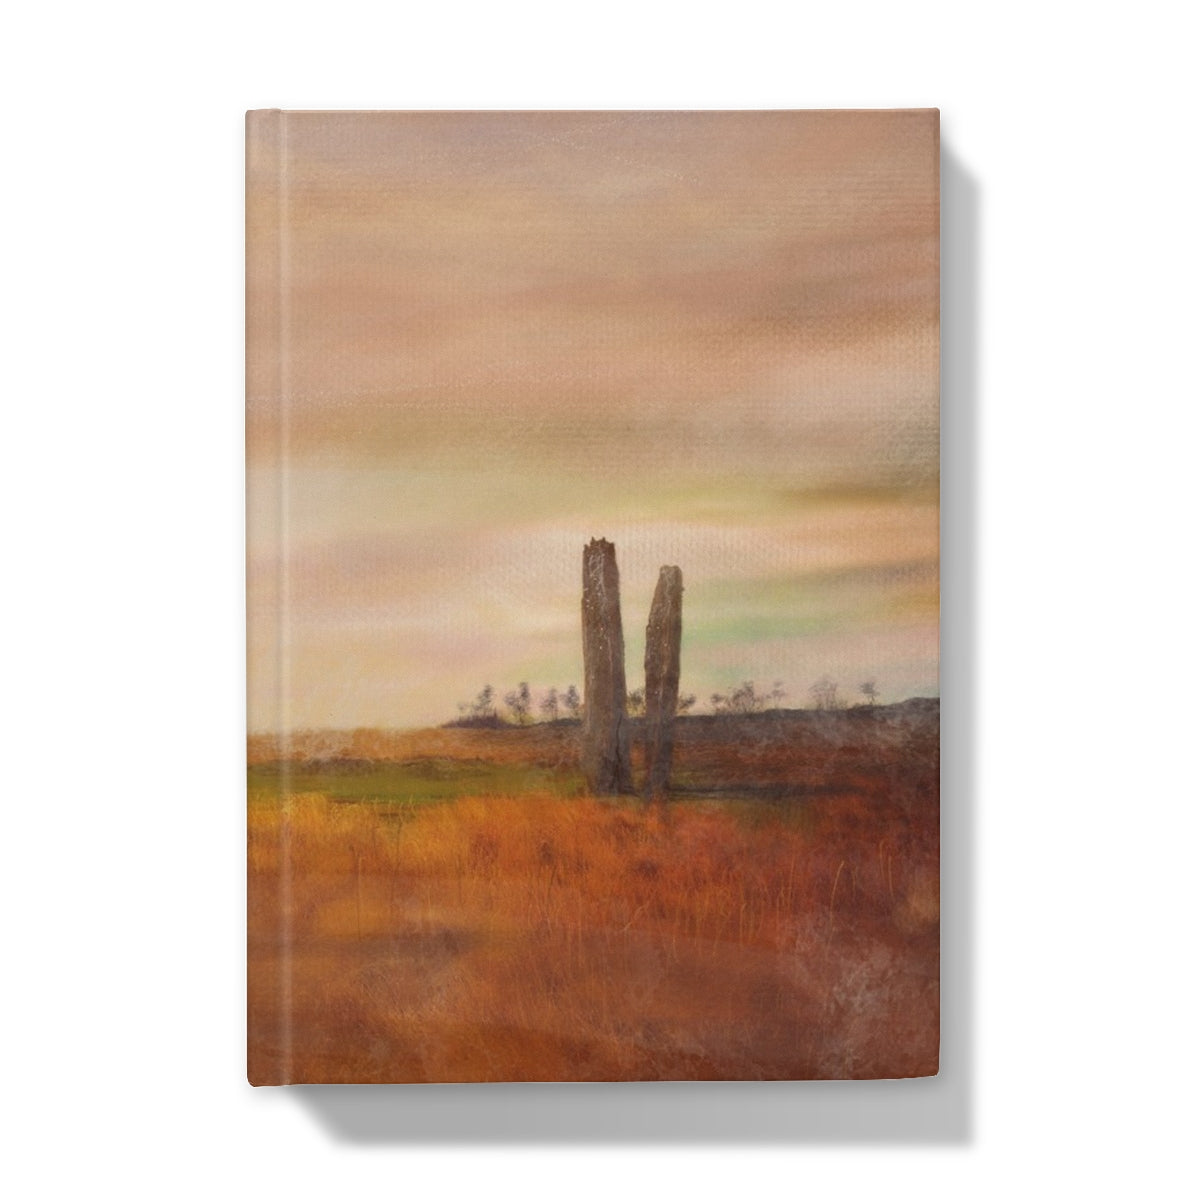 Machrie Moor Arran Art Gifts Hardback Journal-Journals & Notebooks-Arran Art Gallery-5"x7"-Plain-Paintings, Prints, Homeware, Art Gifts From Scotland By Scottish Artist Kevin Hunter